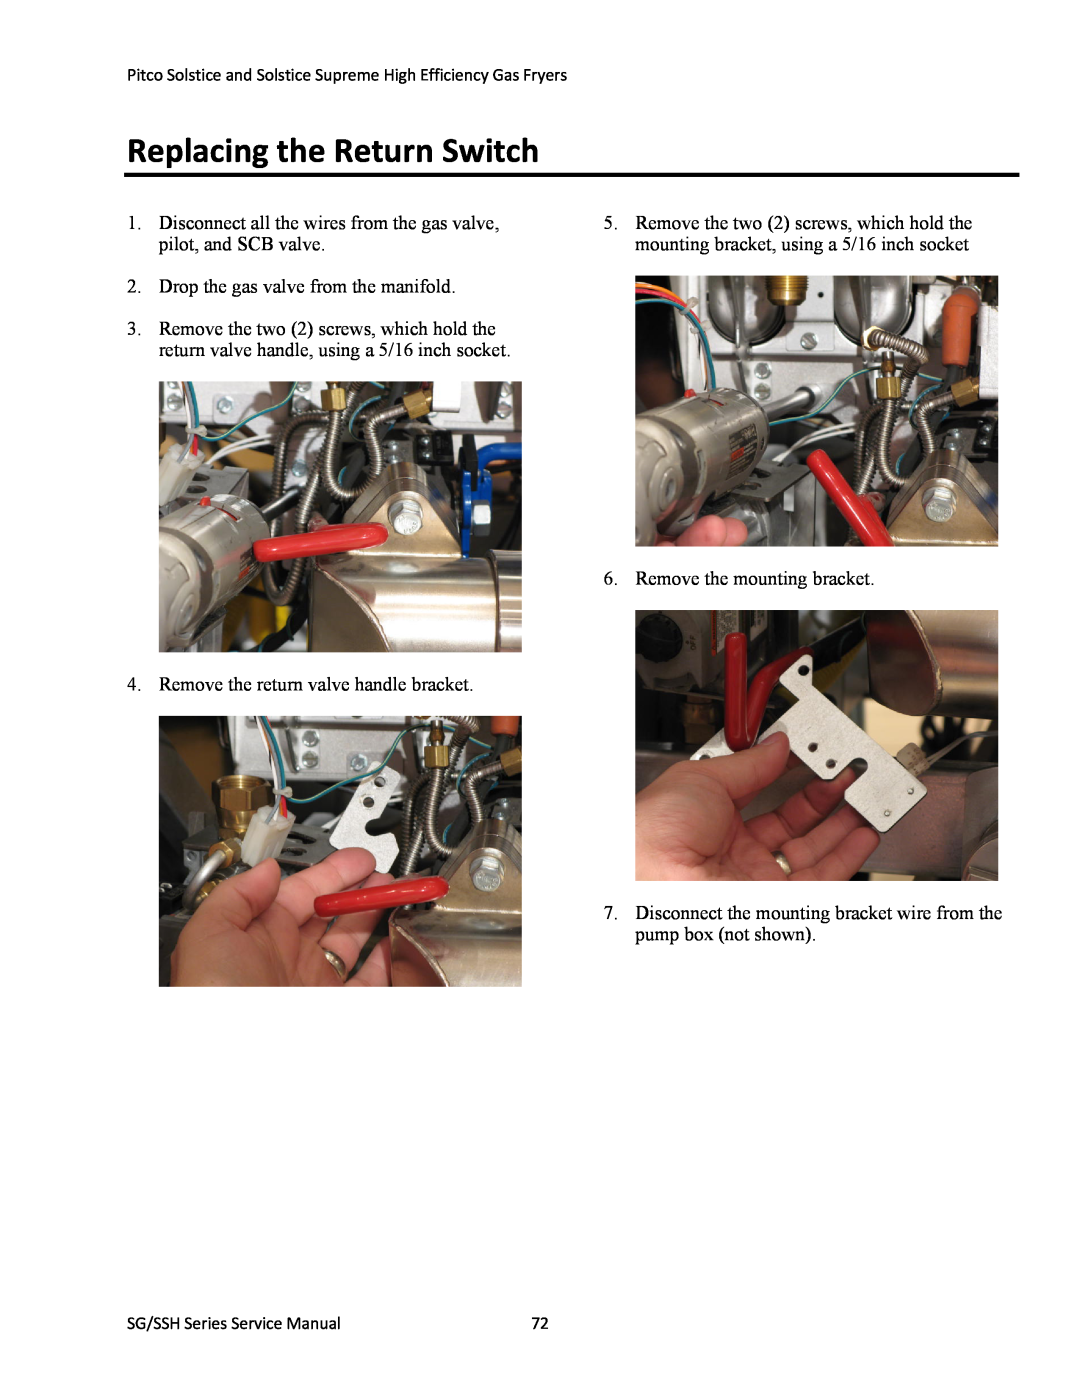 Pitco Frialator L22-345 manual Replacing the Return Switch 